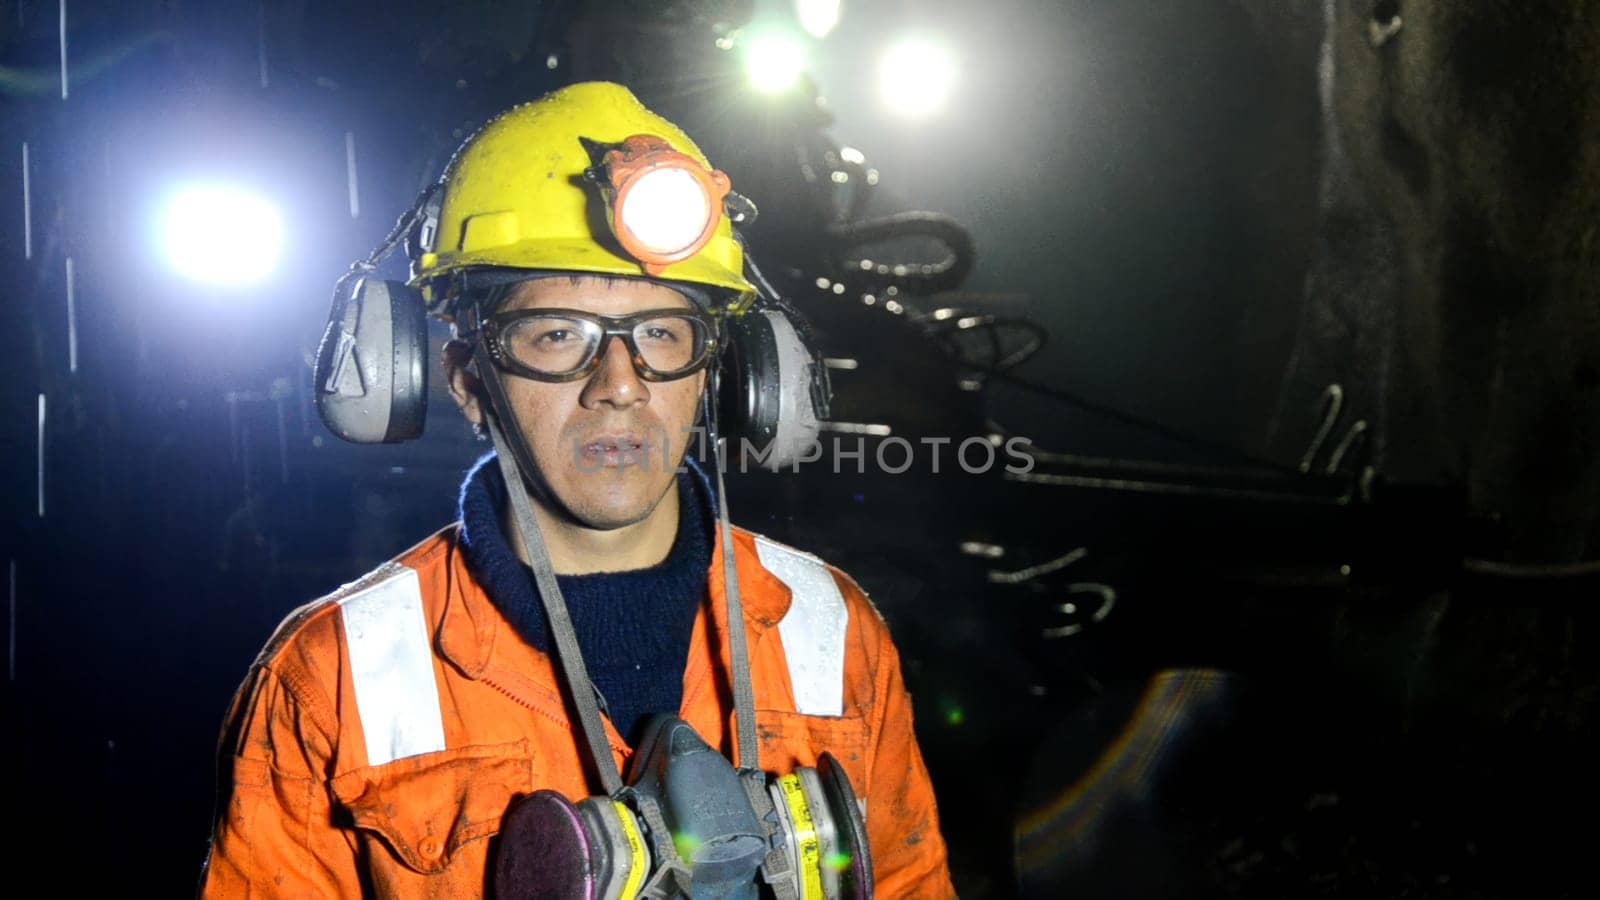 Miner with headlamp in dark mine shaft by Peruphotoart